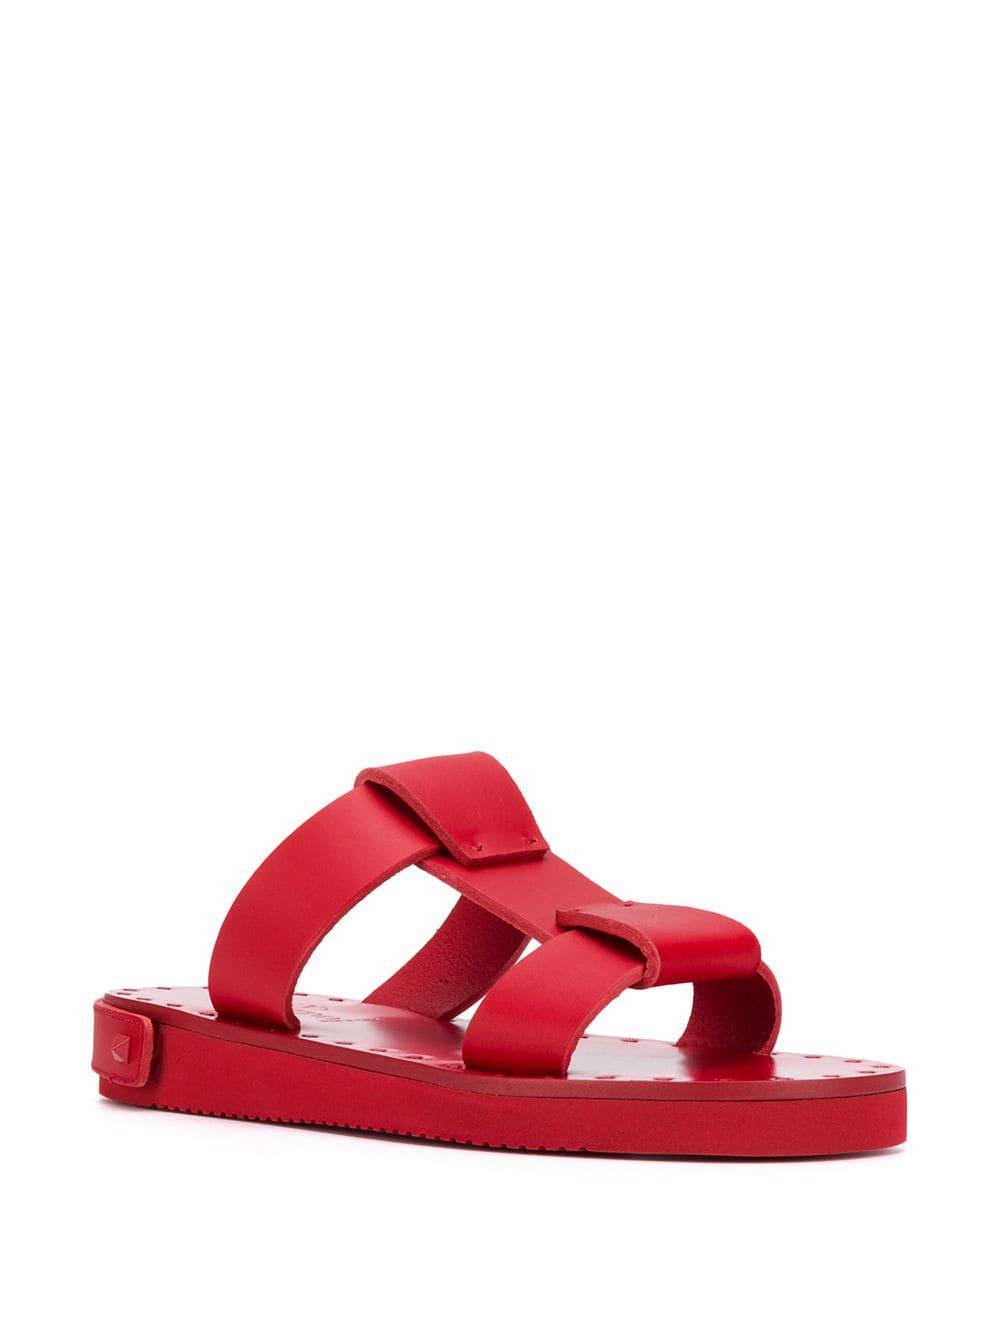 Valentino Leather Valentino Garavani Rockstud Flat Sandals in Red - Lyst